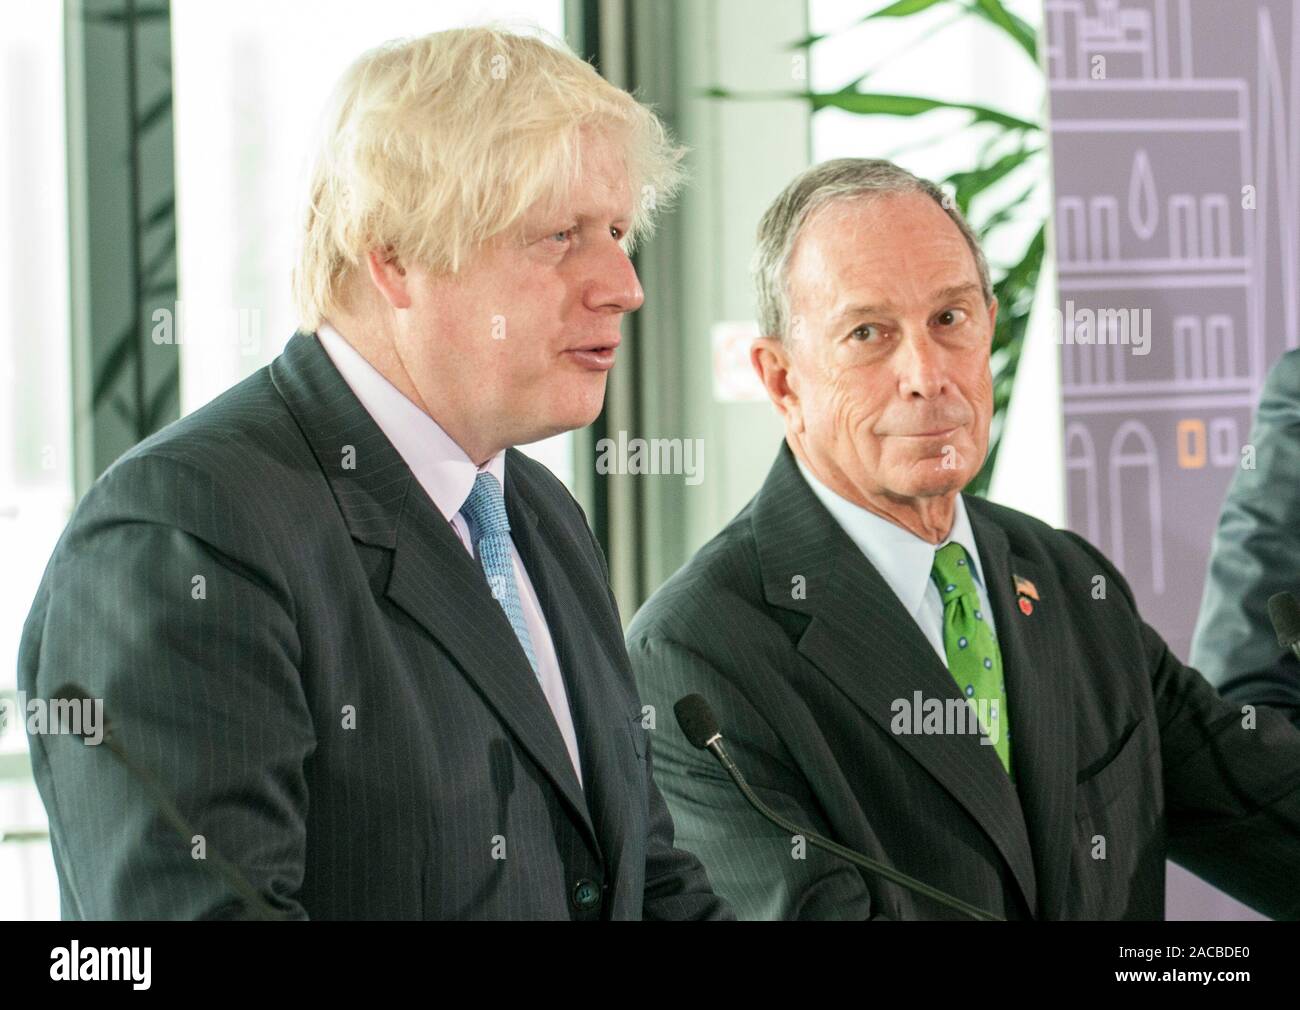 The Mayor of London Boris Johnson with Mayor Michael Bloomberg from New York launching the Mayor's challenge of European cities. Stock Photo